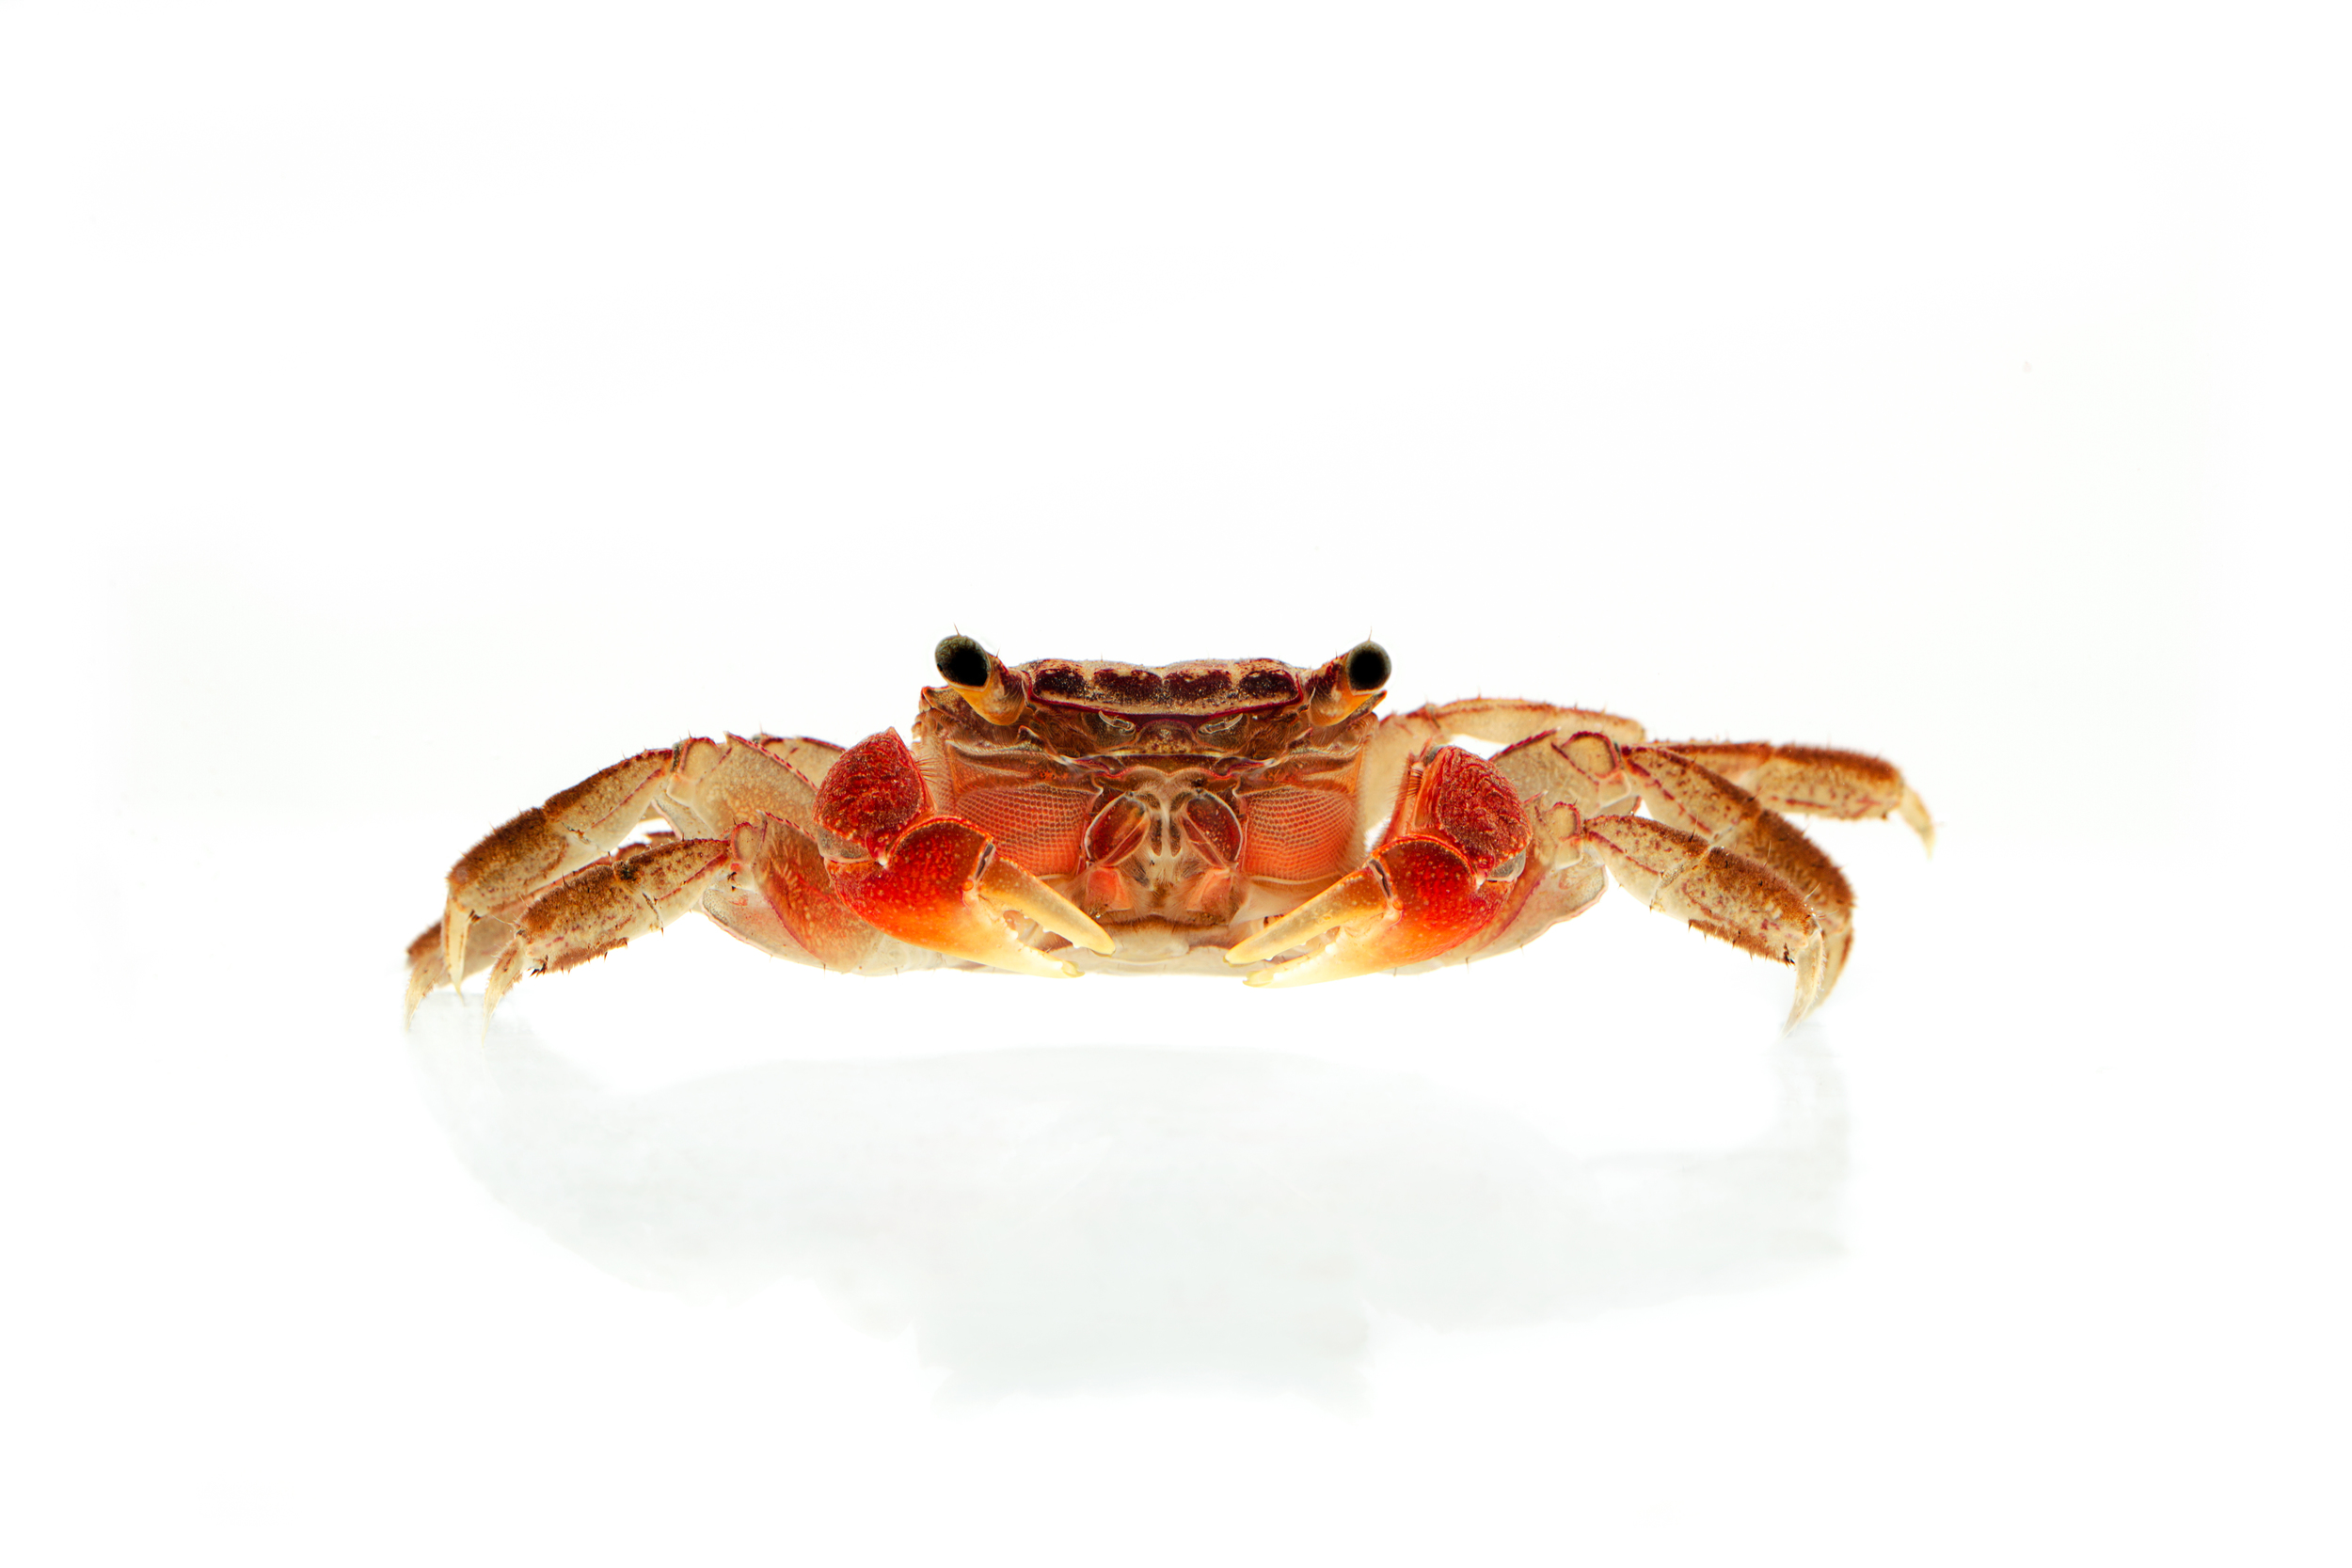 Perisesarma bidens - "The red-clawed crab" 